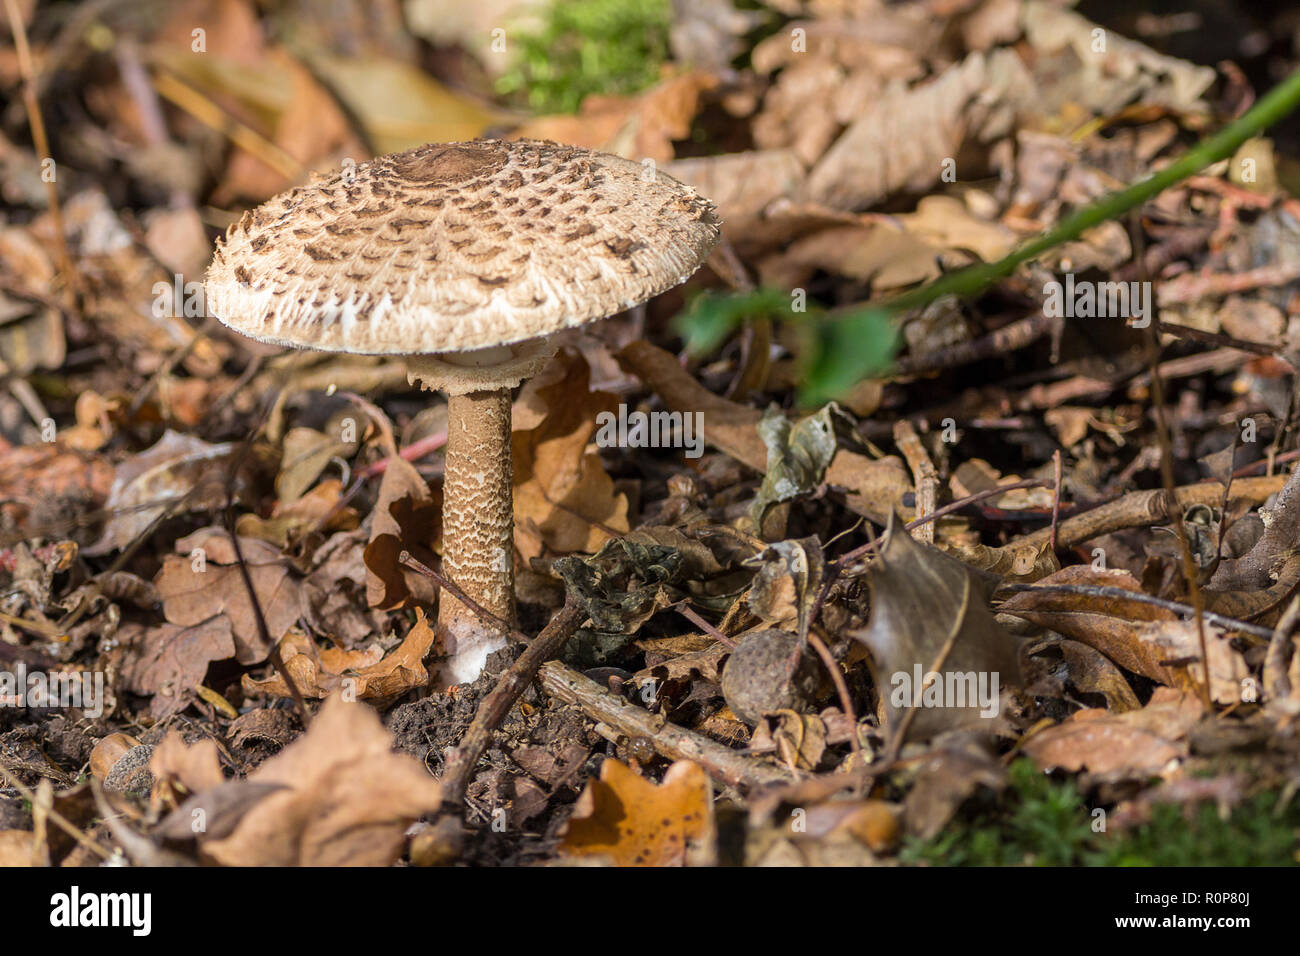 Shaggy parasol (Chlorophyllum) fungi growing wild in woodland. Landscape format image. Leafy twiggy forest floor fungi tall slender stalk scaly cap. Stock Photo